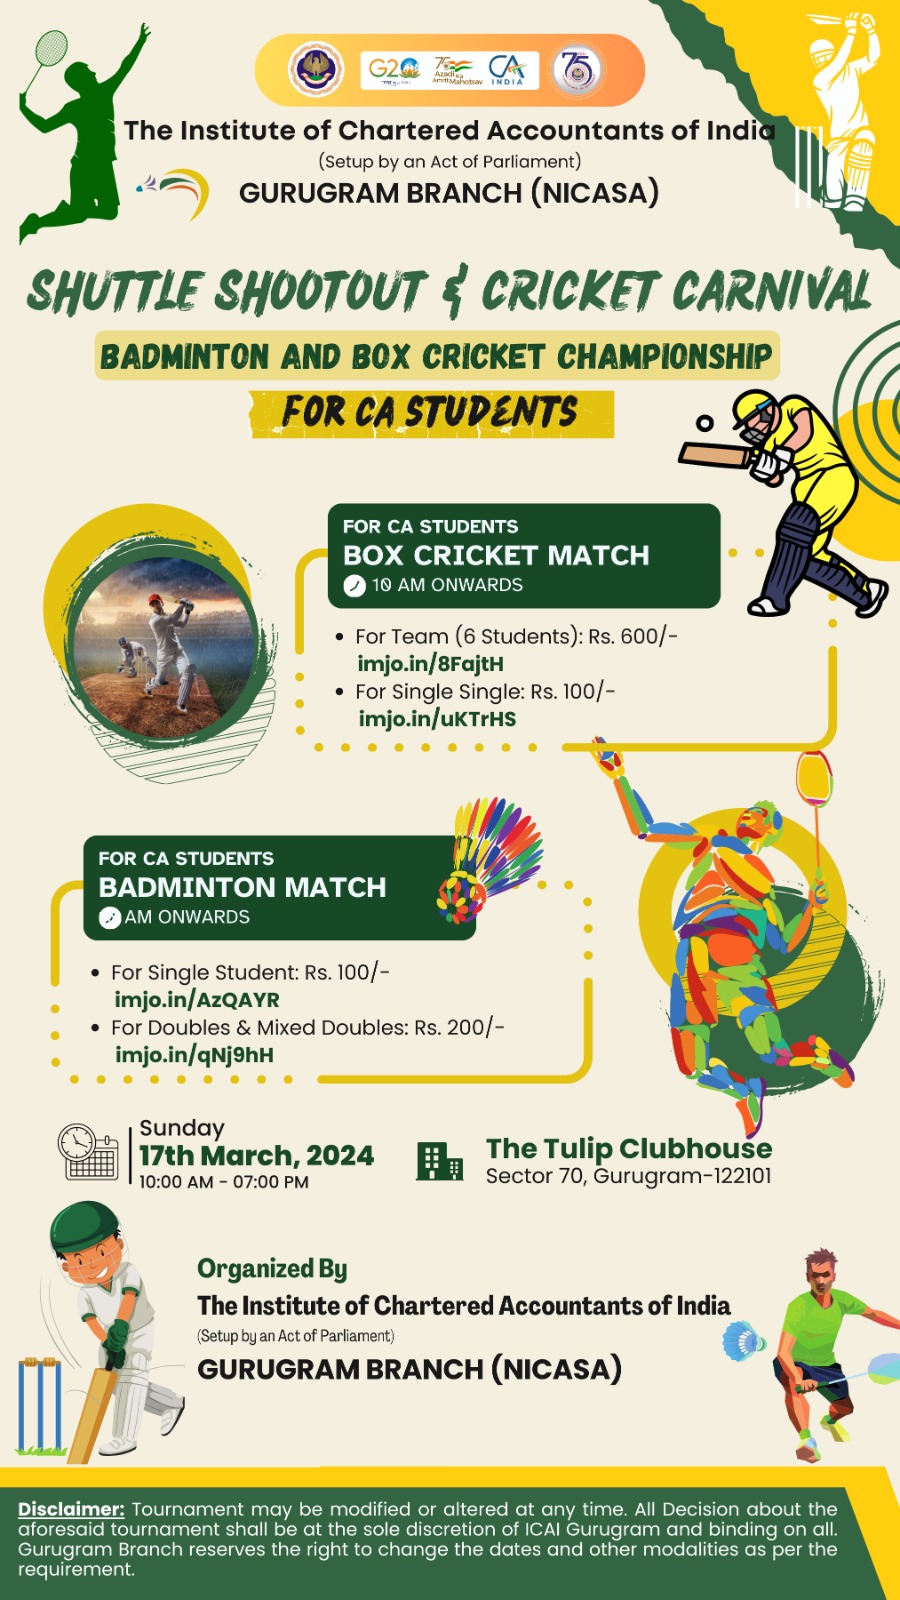 Shuttle Shootout & Cricket Carnival: Badminton and Box Cricket Championship